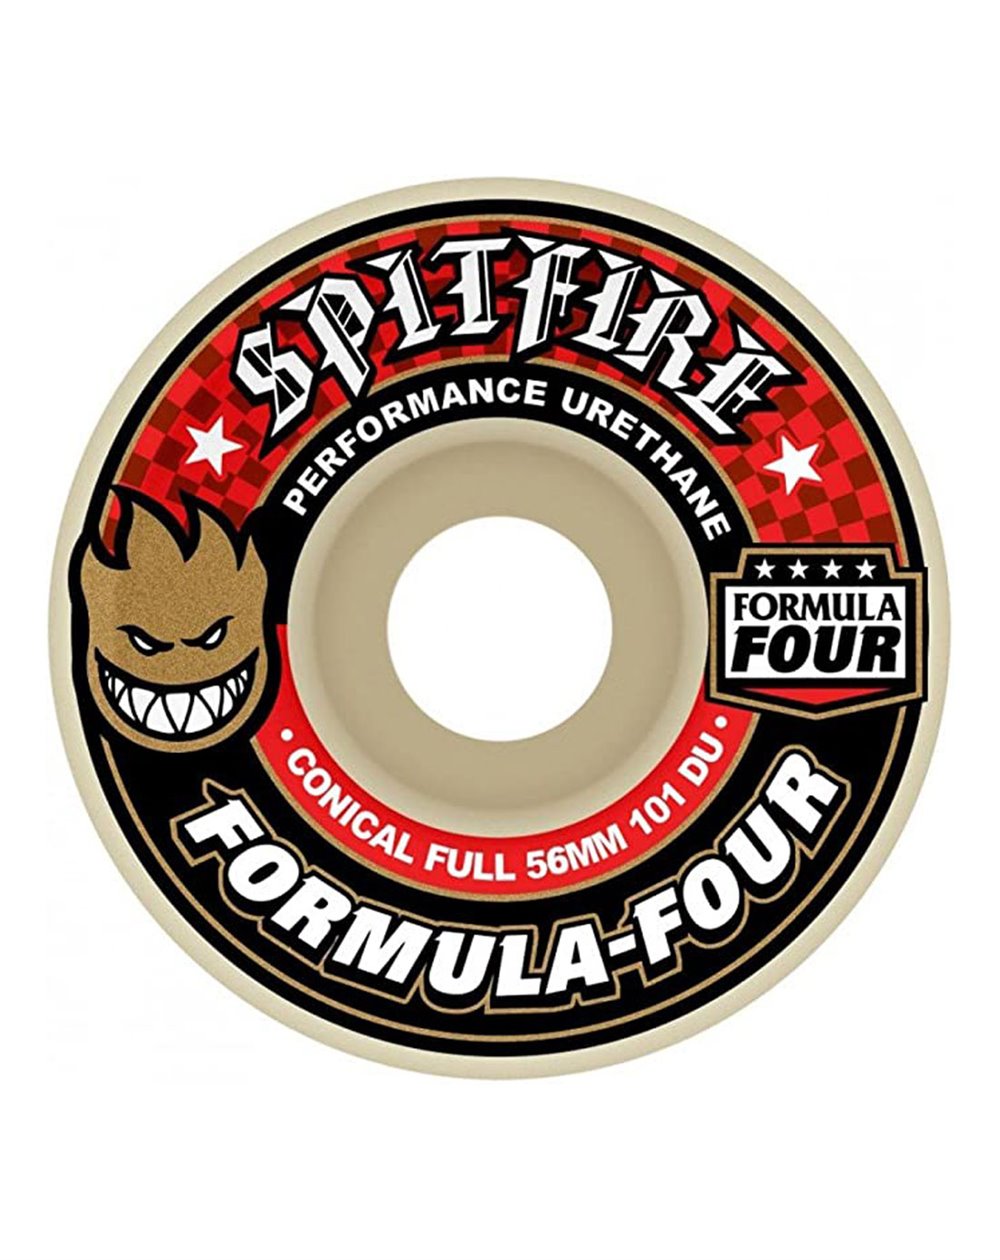 Spitfire Ruote Skate Formula Four Conical Full 56mm 101A 4 pz